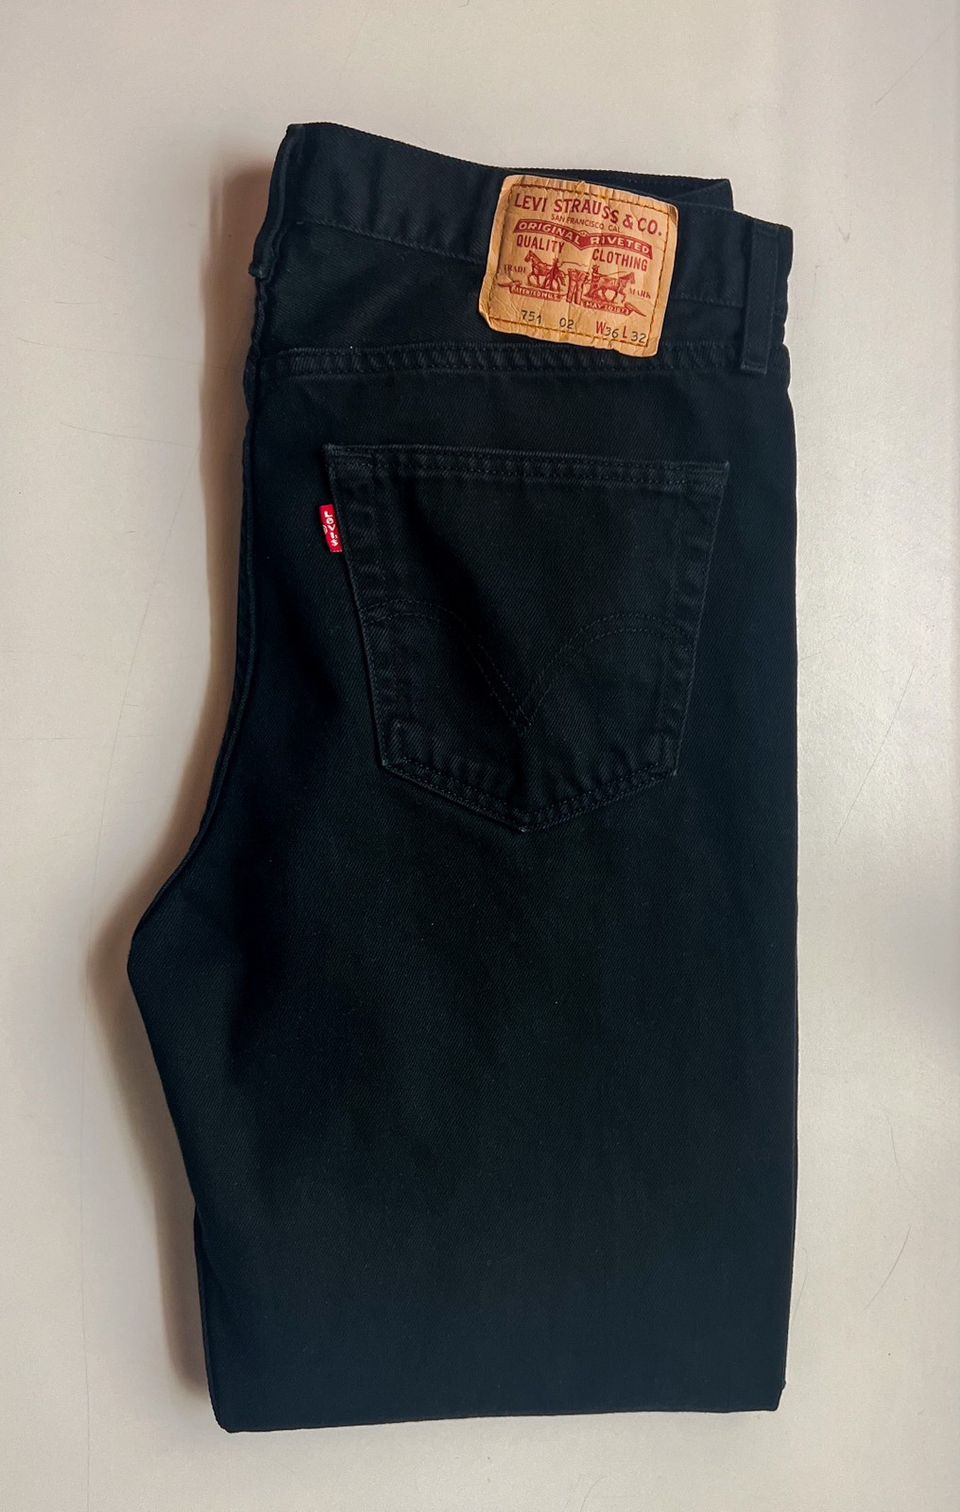 Levi Strauss Co. 751 Black Jeans